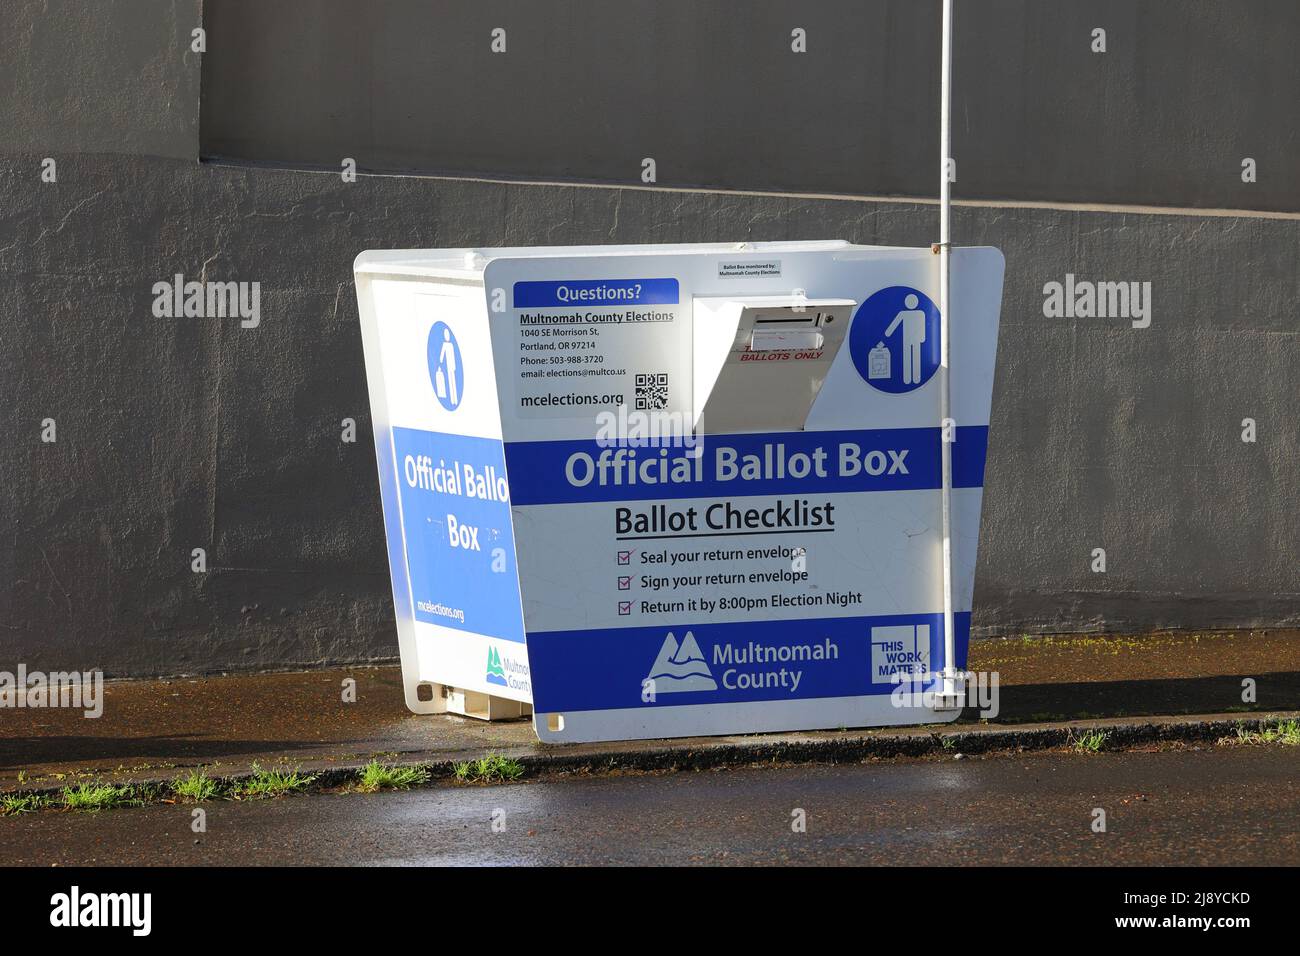 A Multnomah County Official Ballot Box, ballot drop box outside the Multnomah County Elections office building in Portland, Oregon, April 30, 2022. Stock Photo